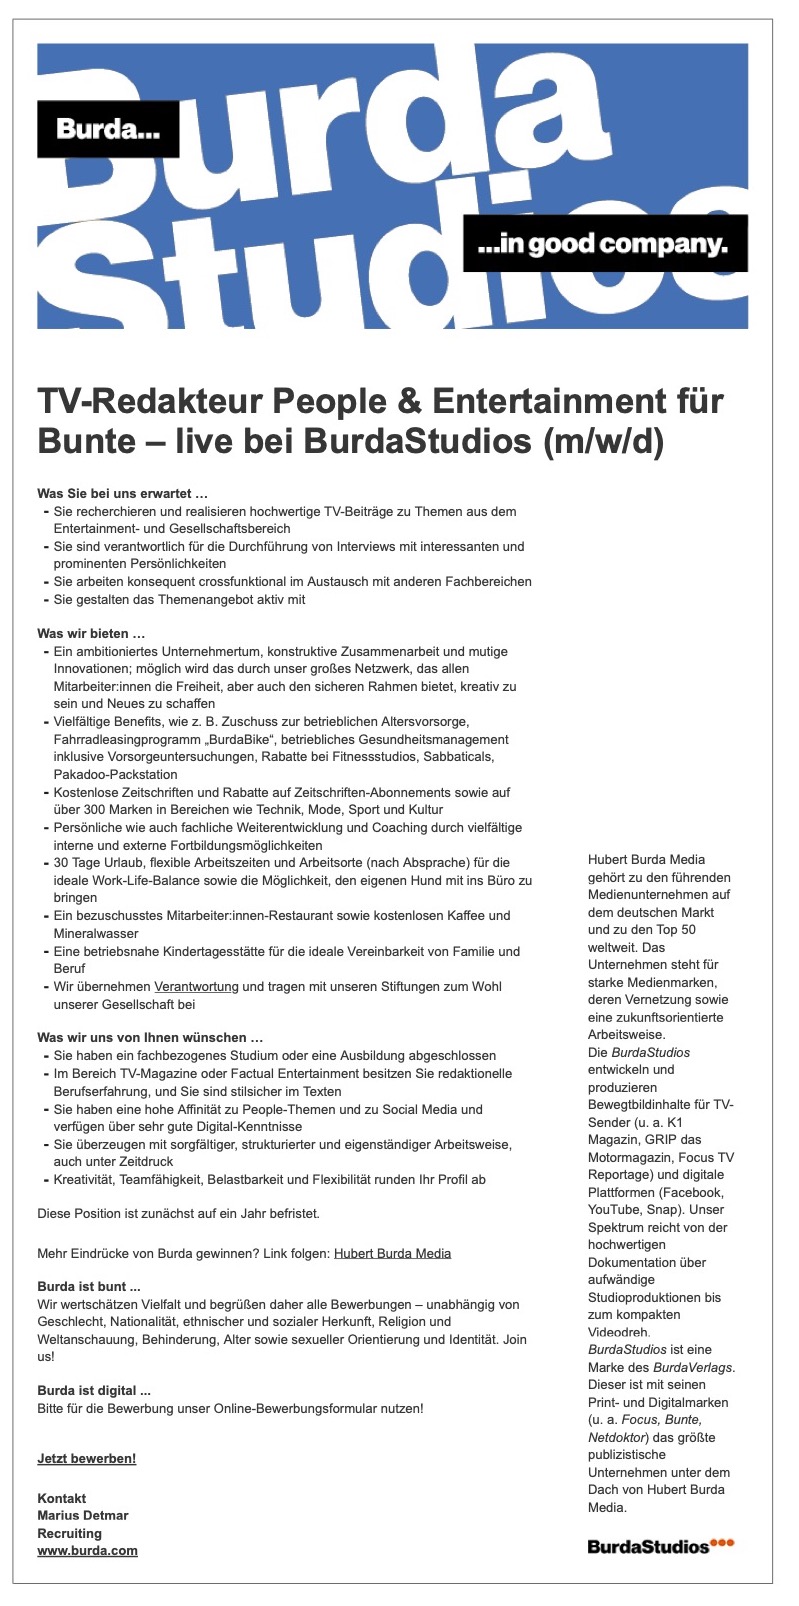 TV-Redakteur People & Entertainment für Bunte – live bei BurdaStudios (m/w/d)